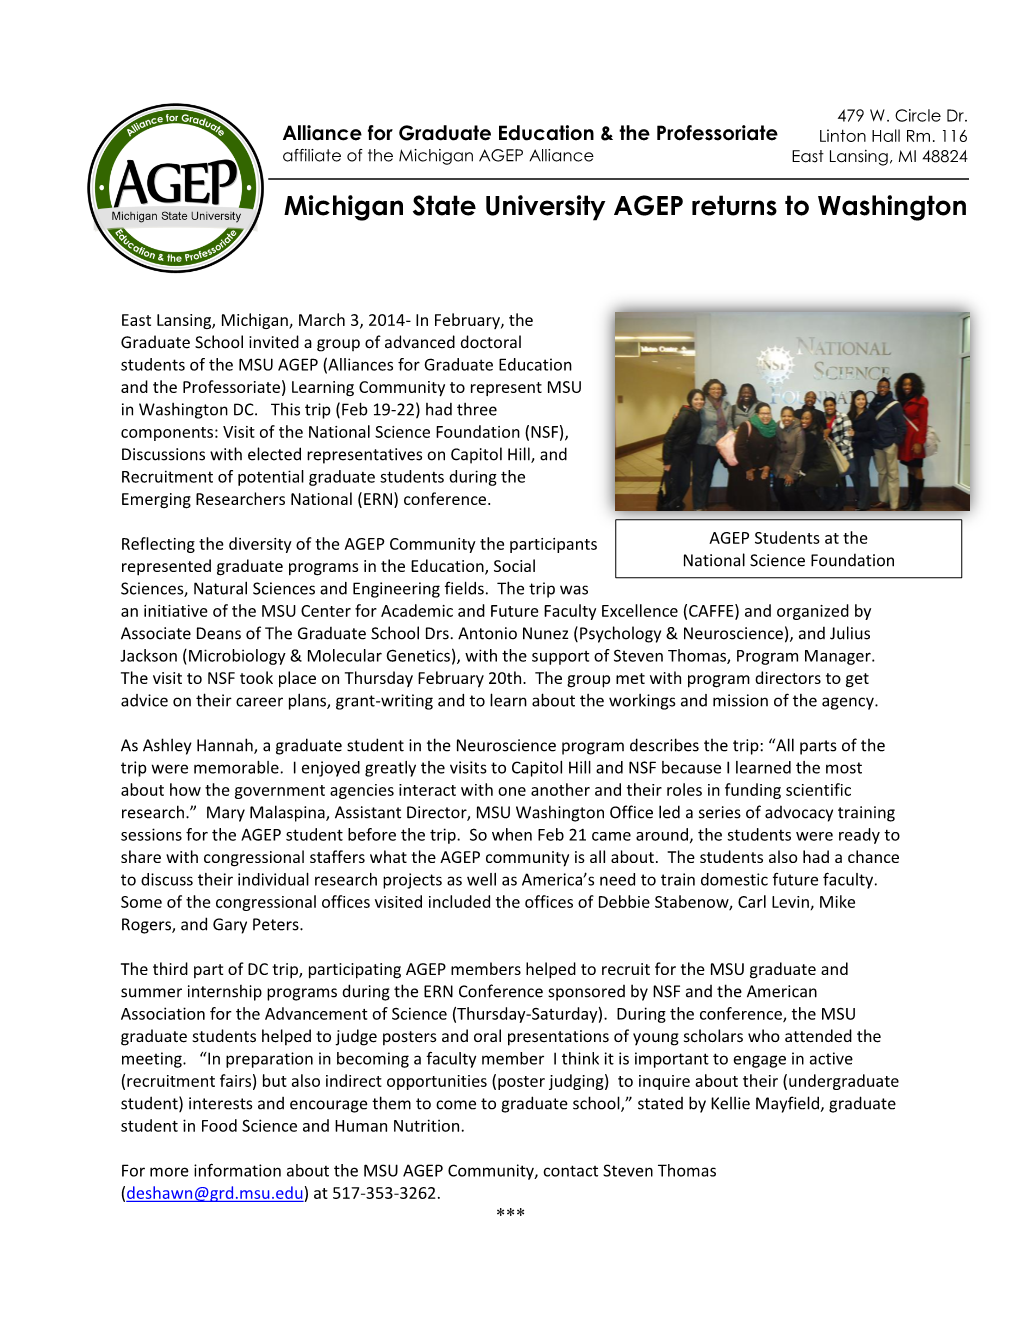 Michigan State University AGEP Returns to Washington